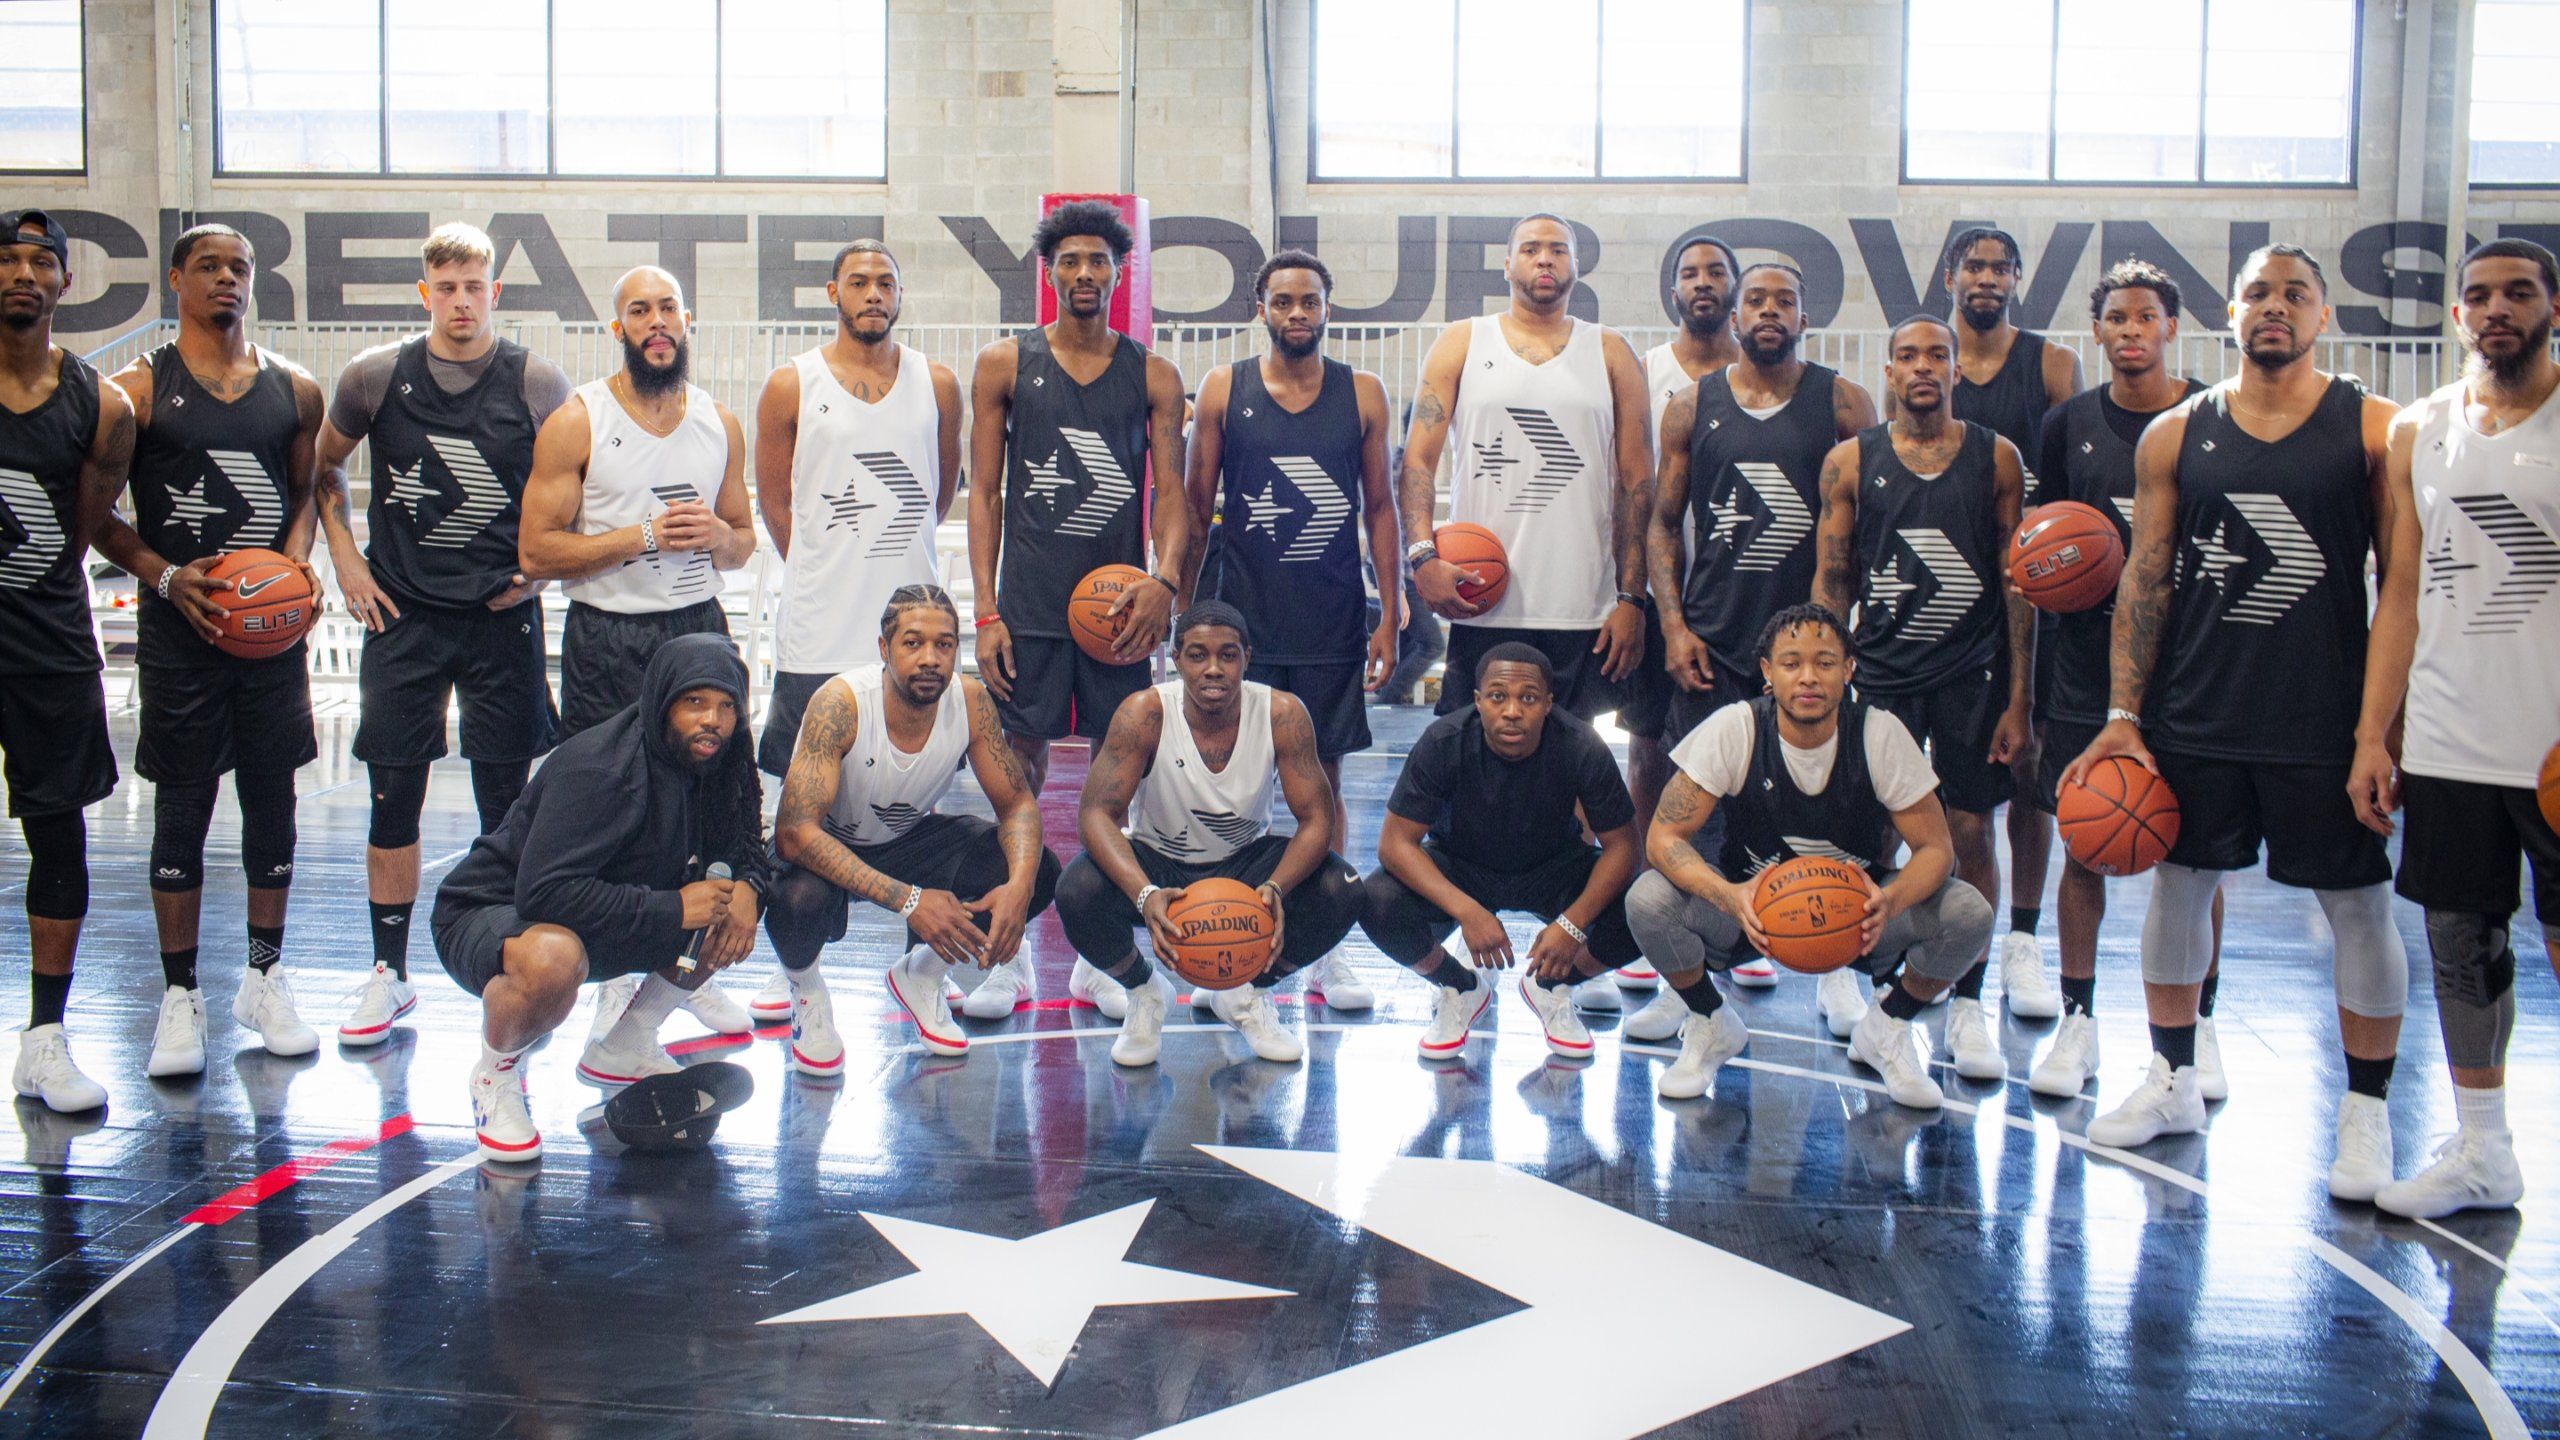 Twenty basketball players posing on court. All players wearing Converse jerseys. court has large Converse star logo.